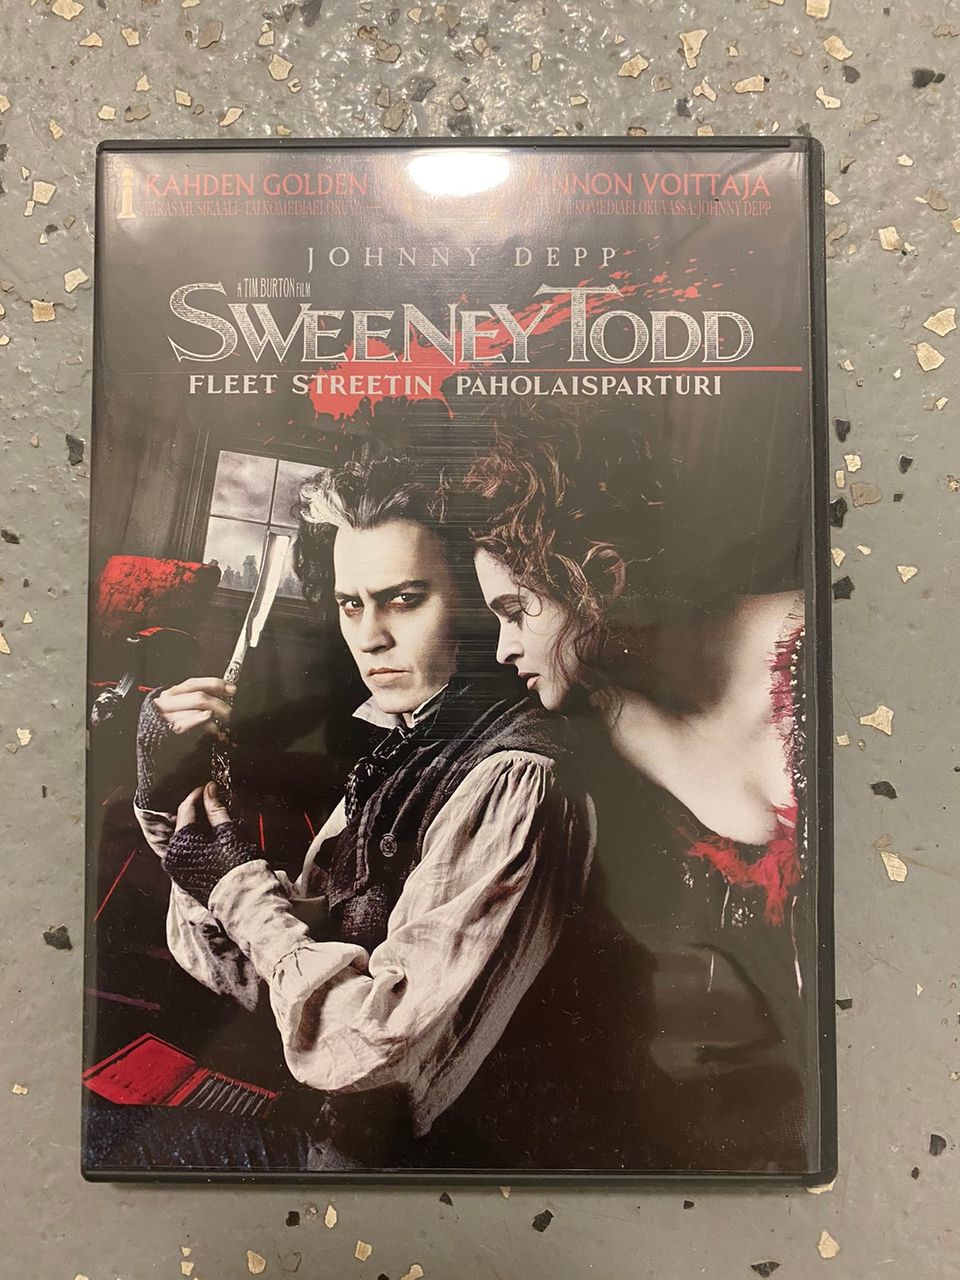 Sweeney todd dvd